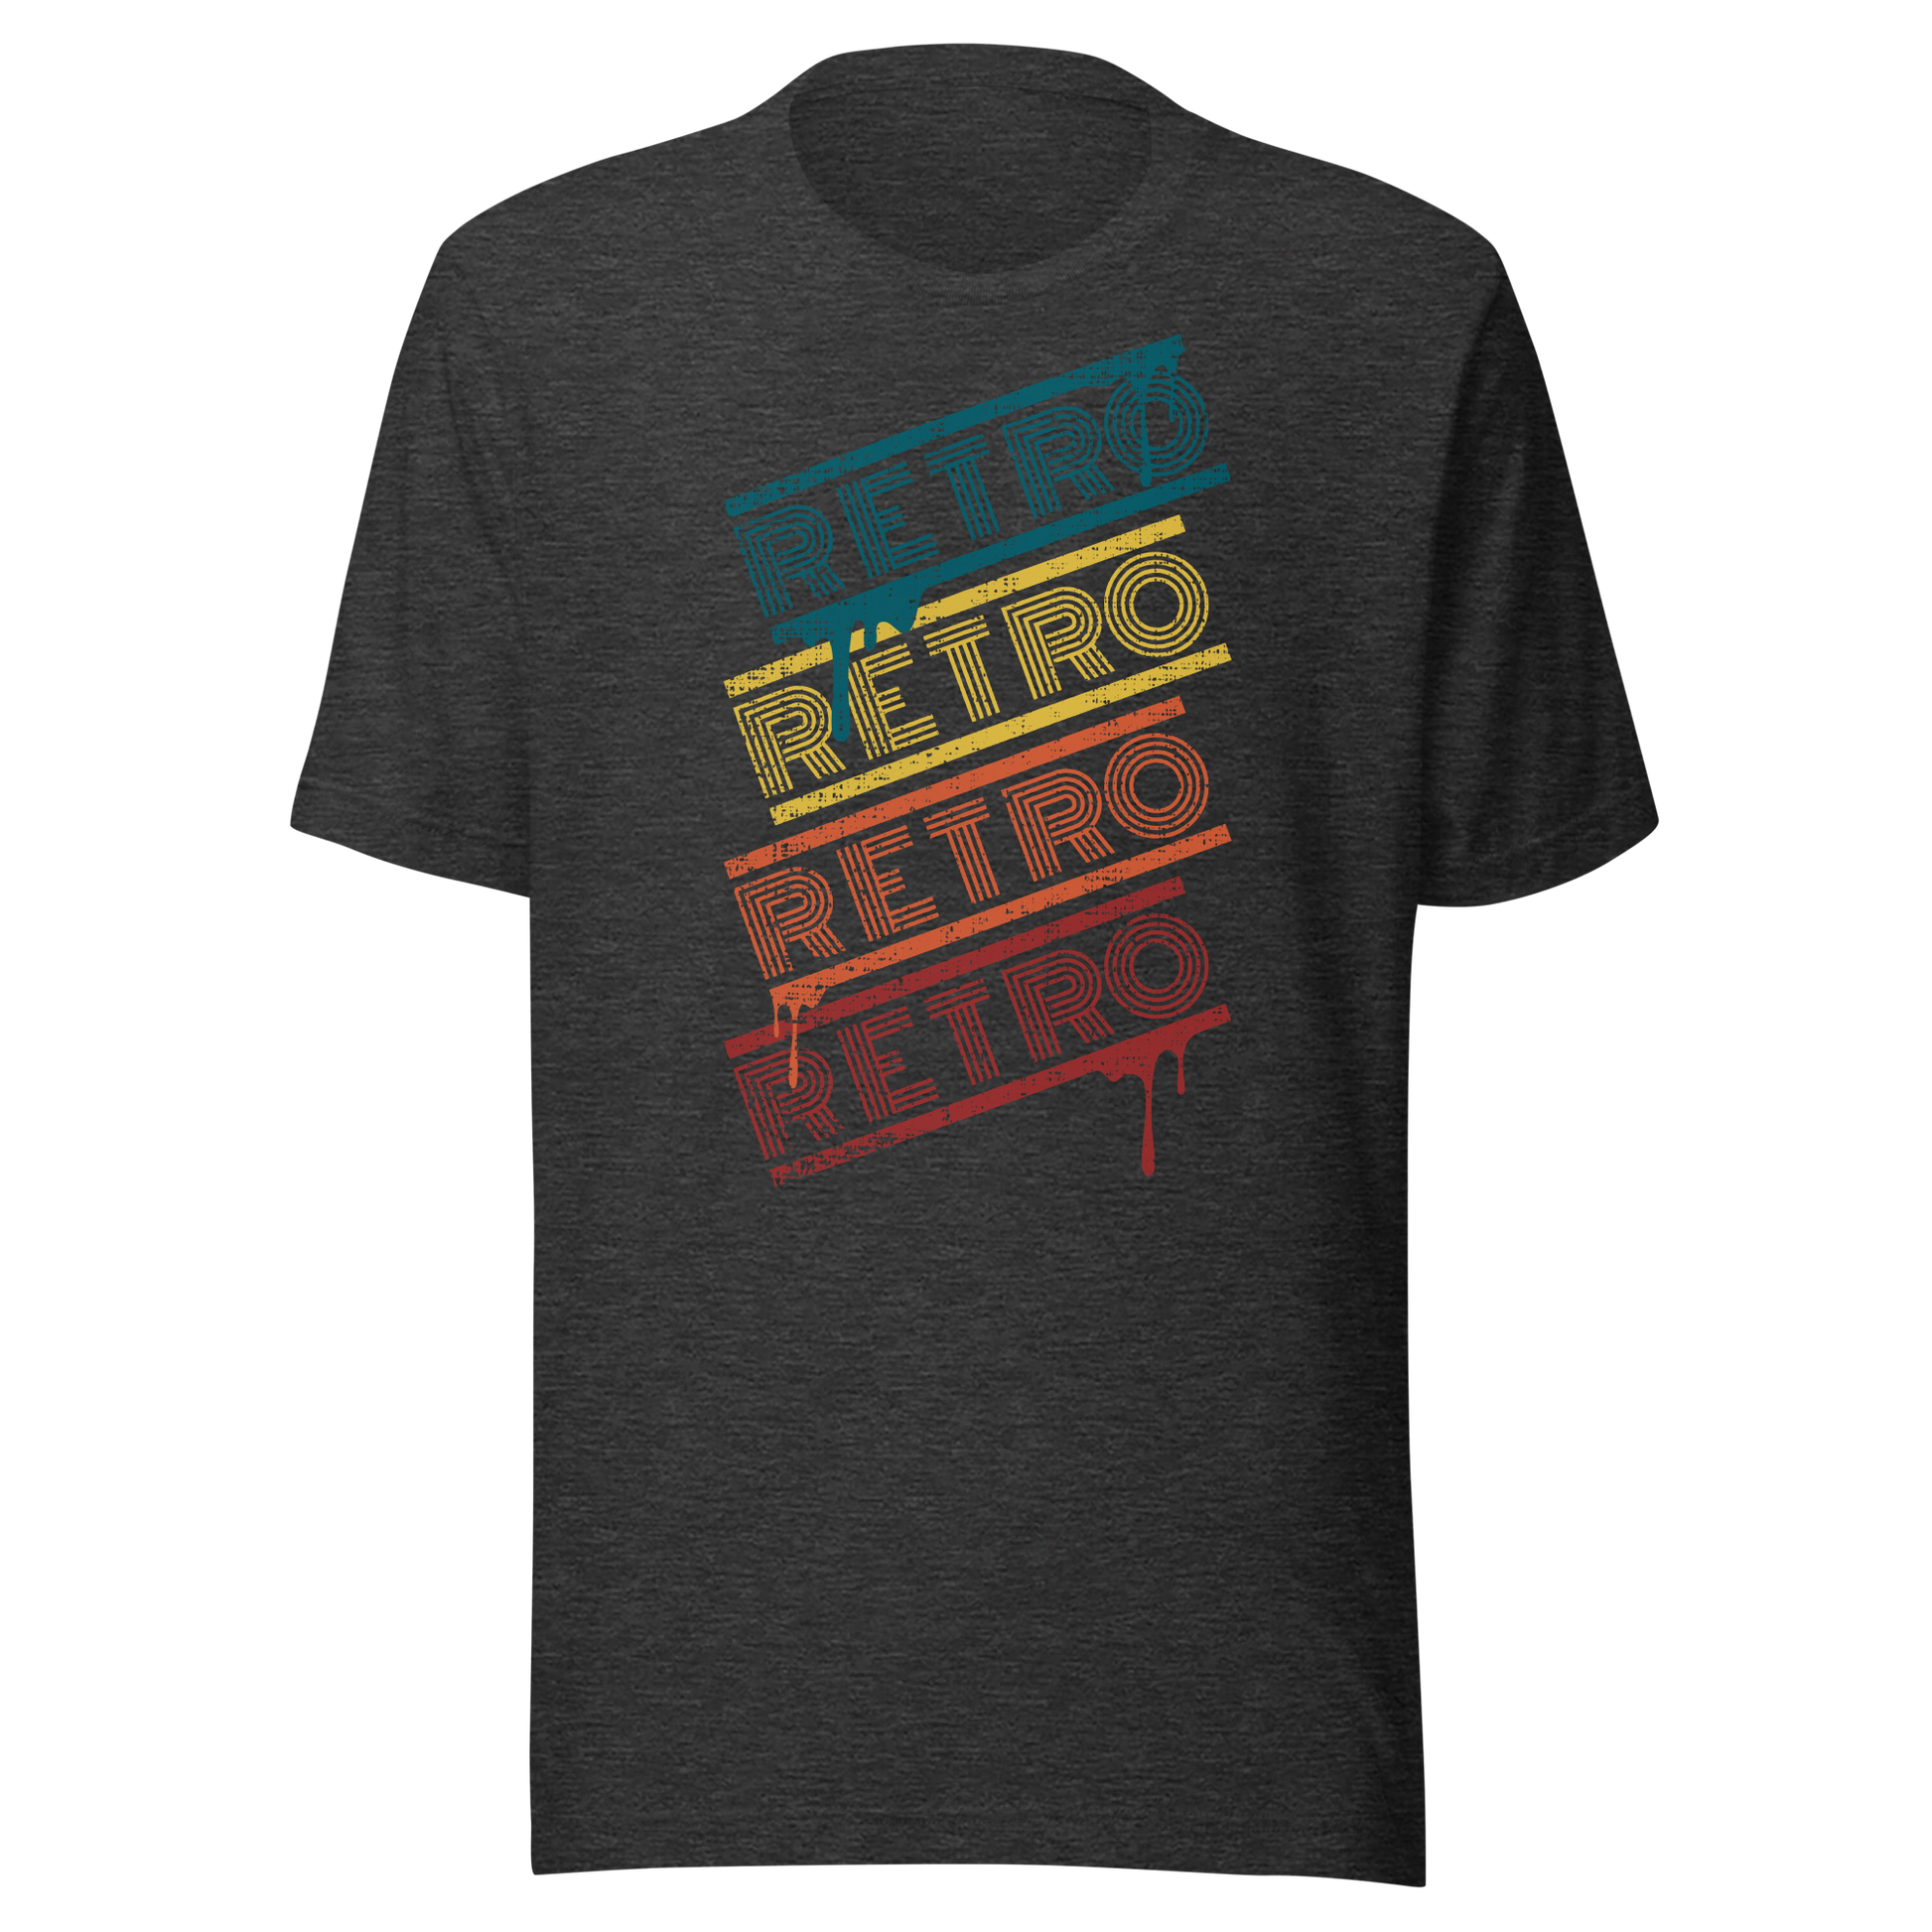 Retro Unisex T-Shirt - Colorful Retro Typography Design Ghost Front